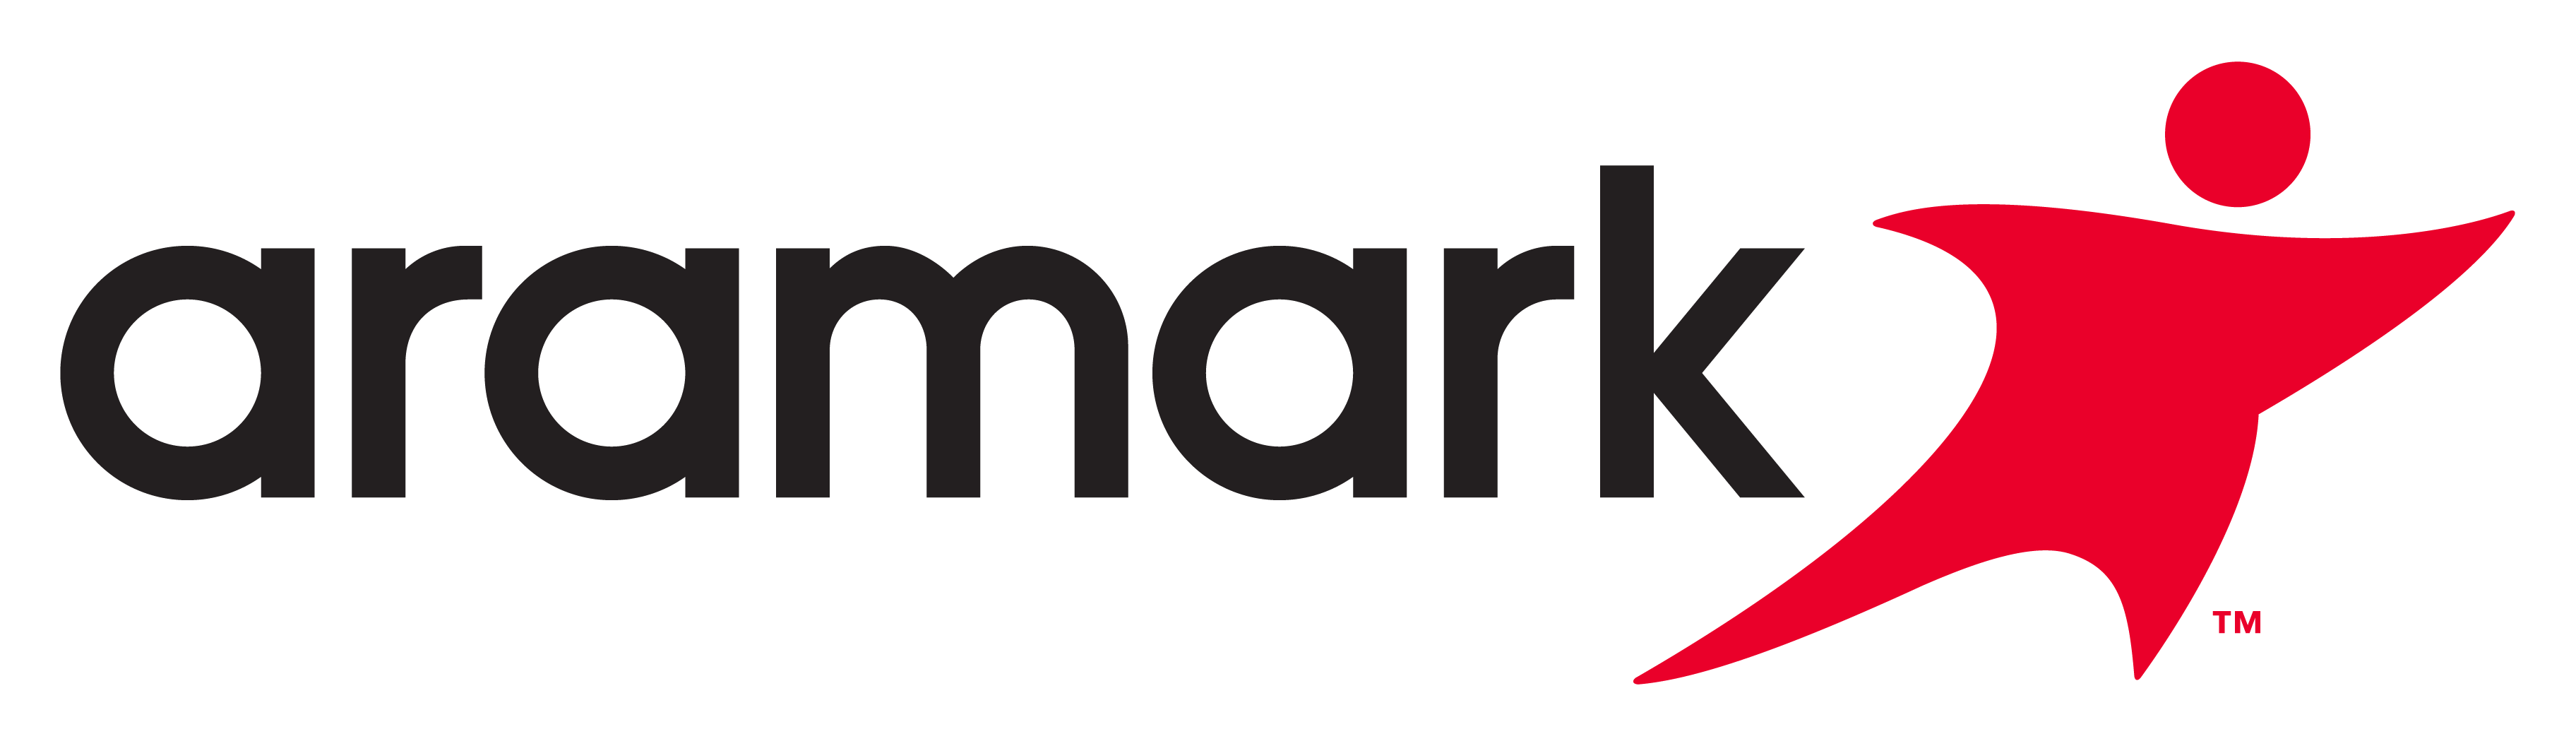 Logo Aramark Download HQ PNG Image